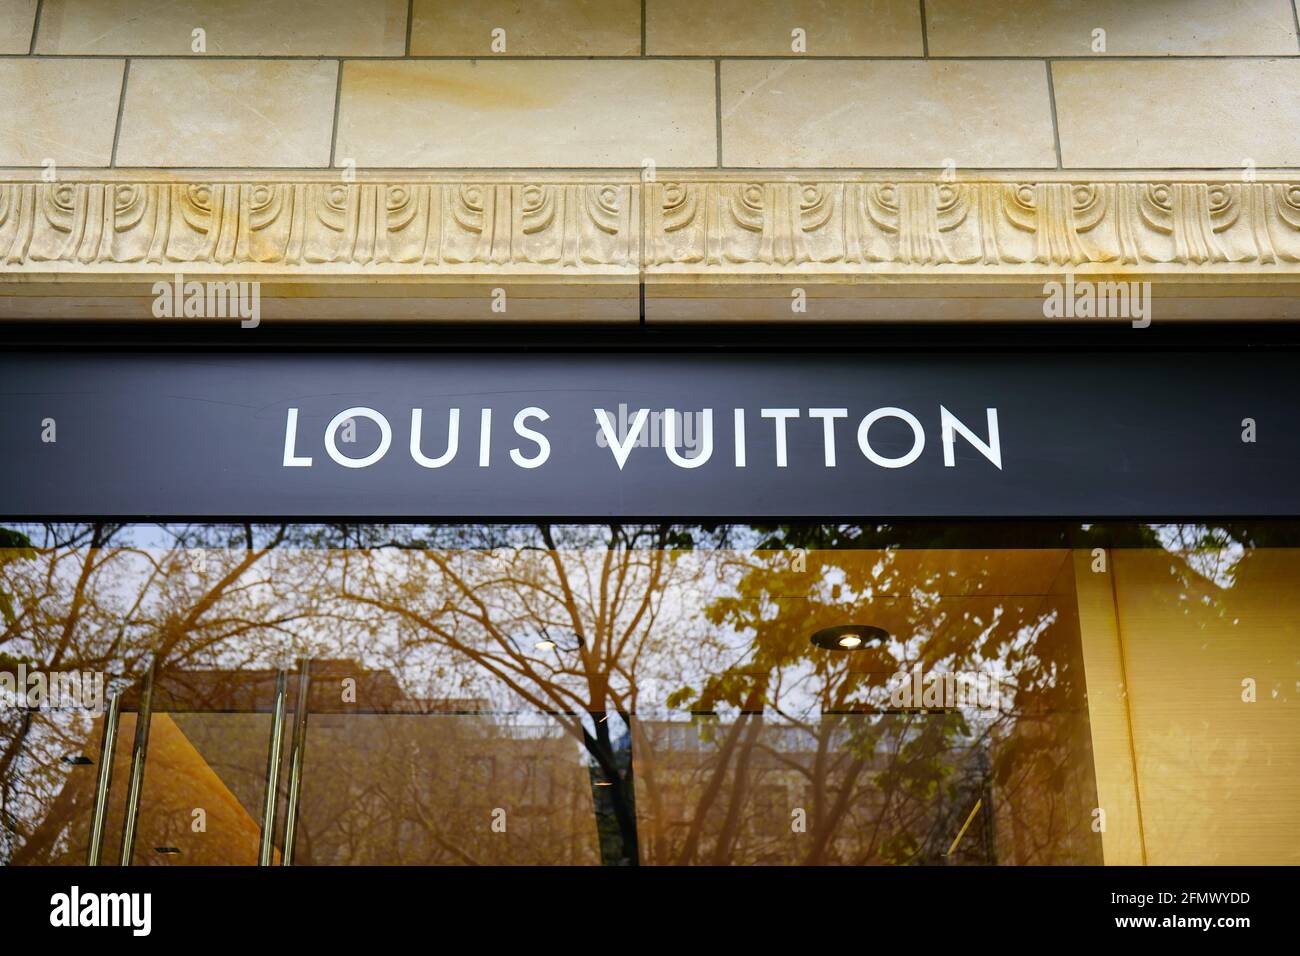 750+ Louis Vuitton Designer Label Photos Stock Photos, Pictures